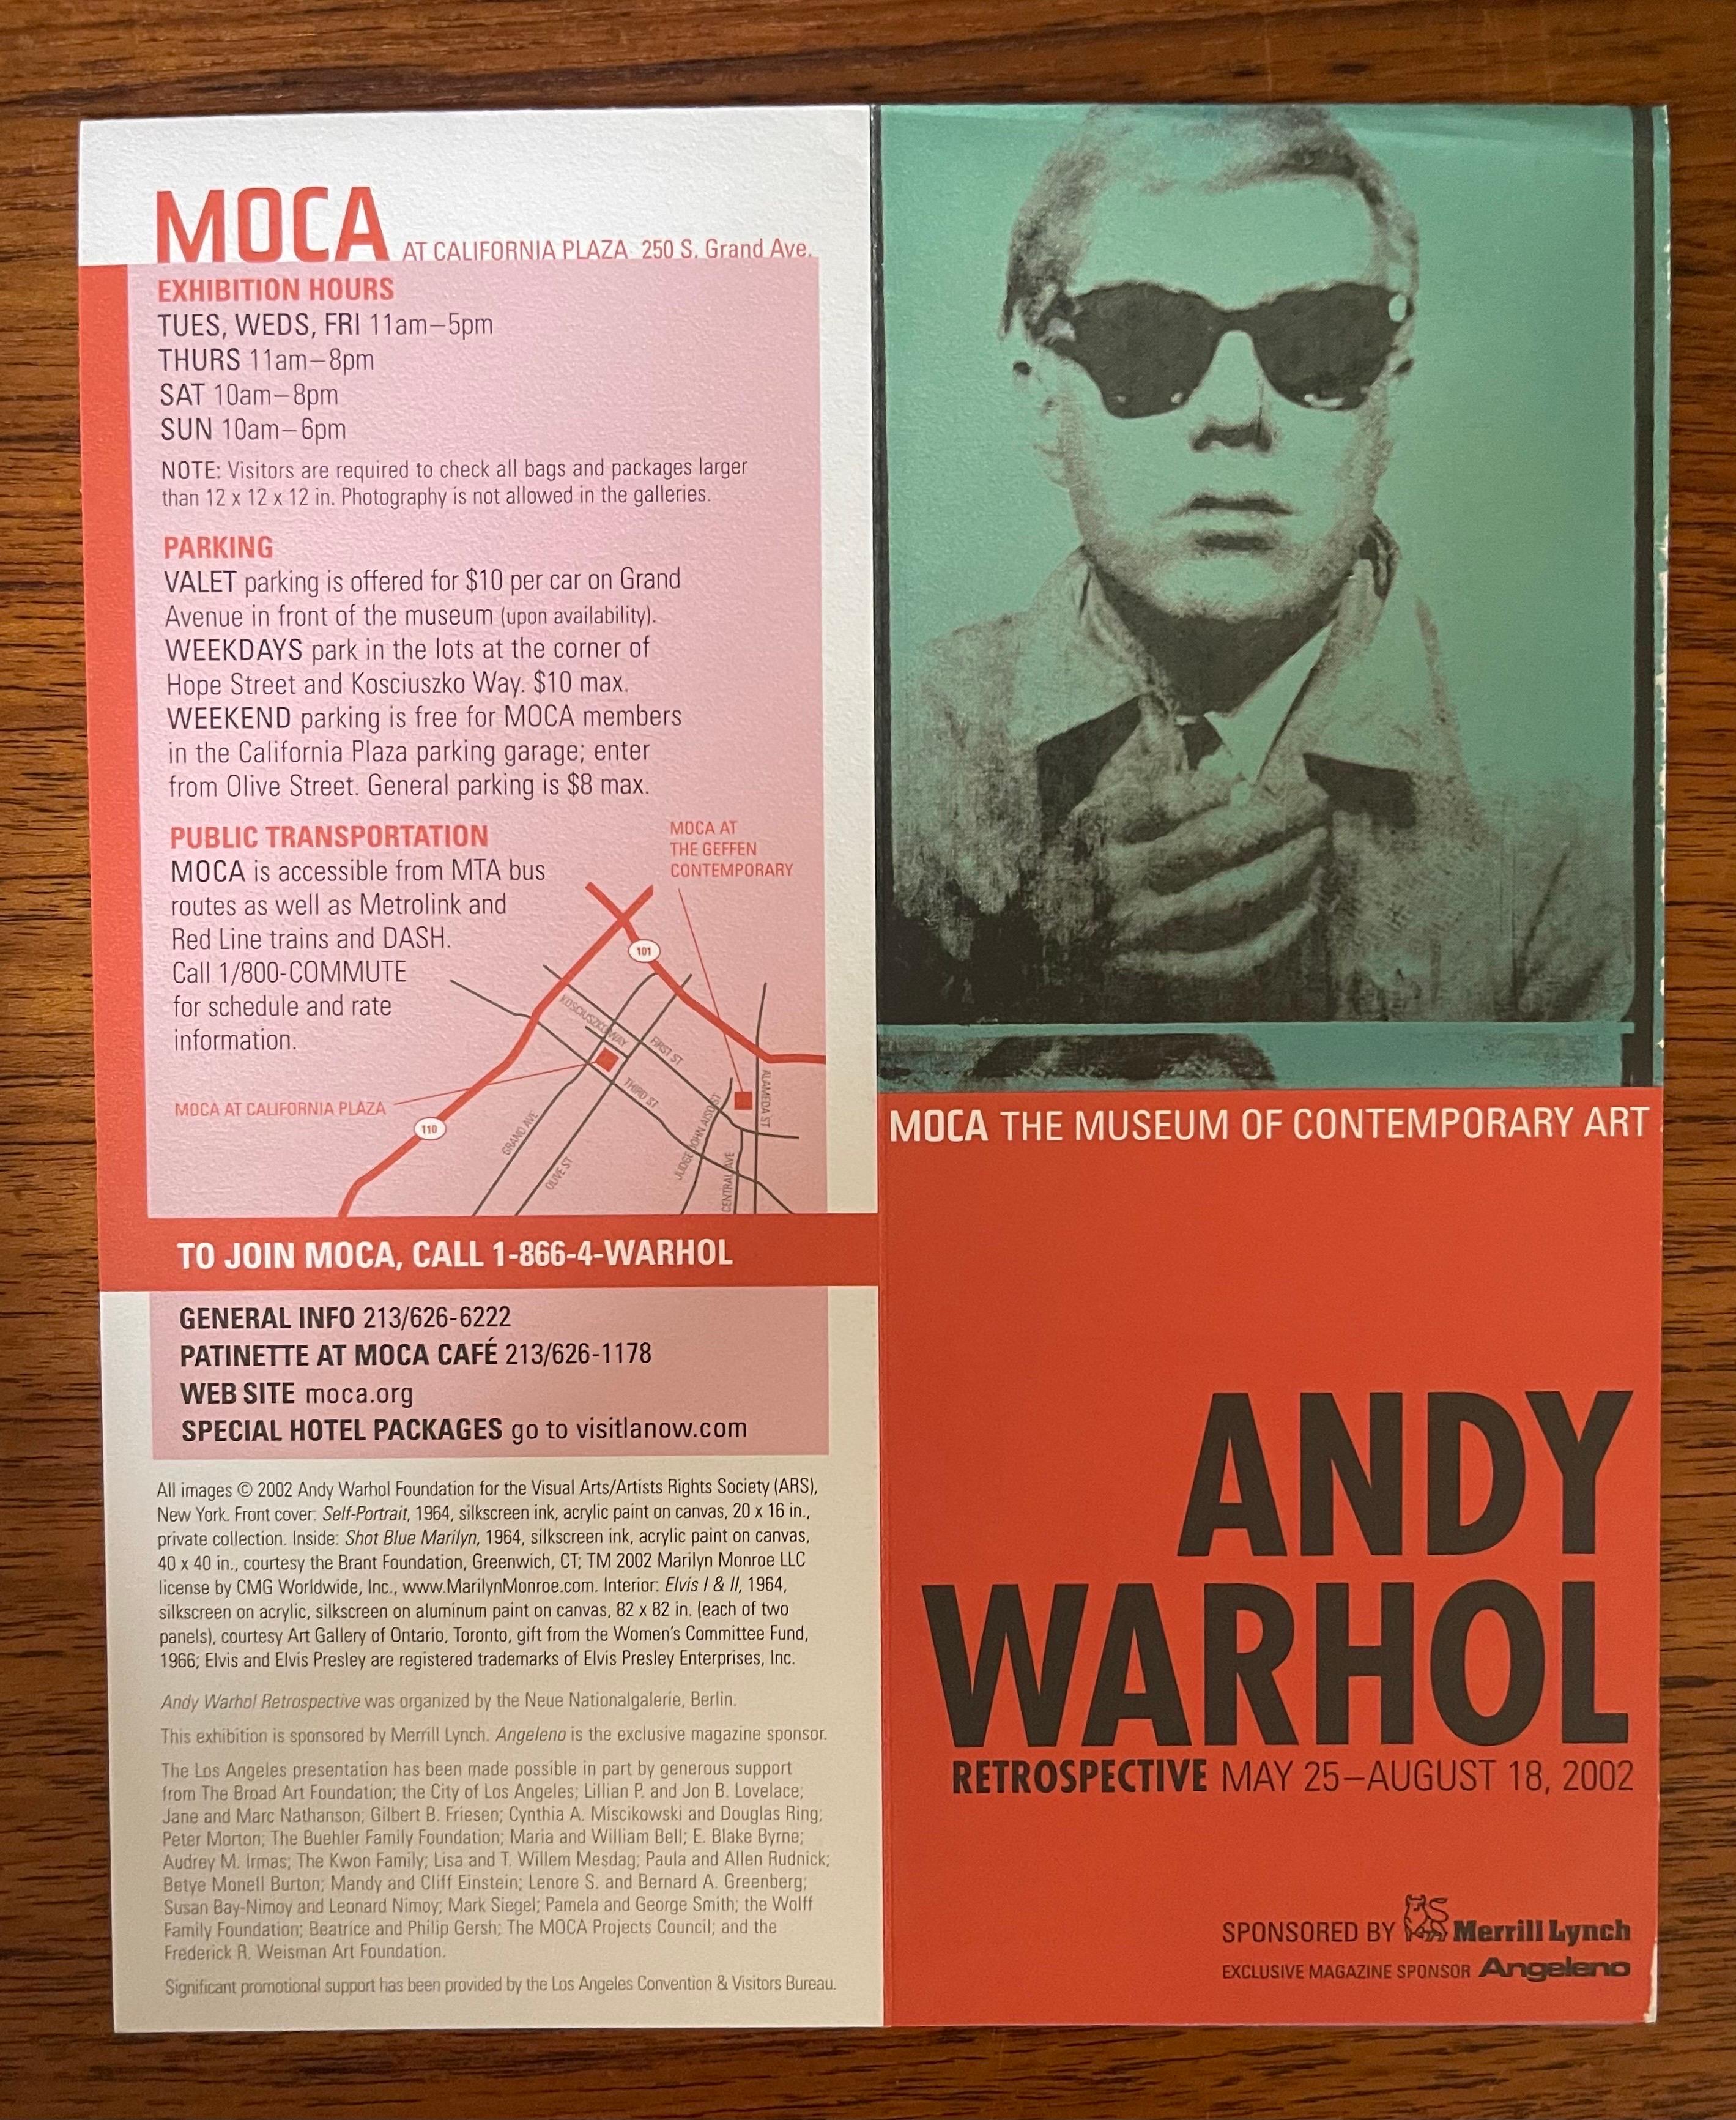 Livres d'art rétrospectifs et programmes d'expositions Moca LA 2002 de Warhol en vente 7